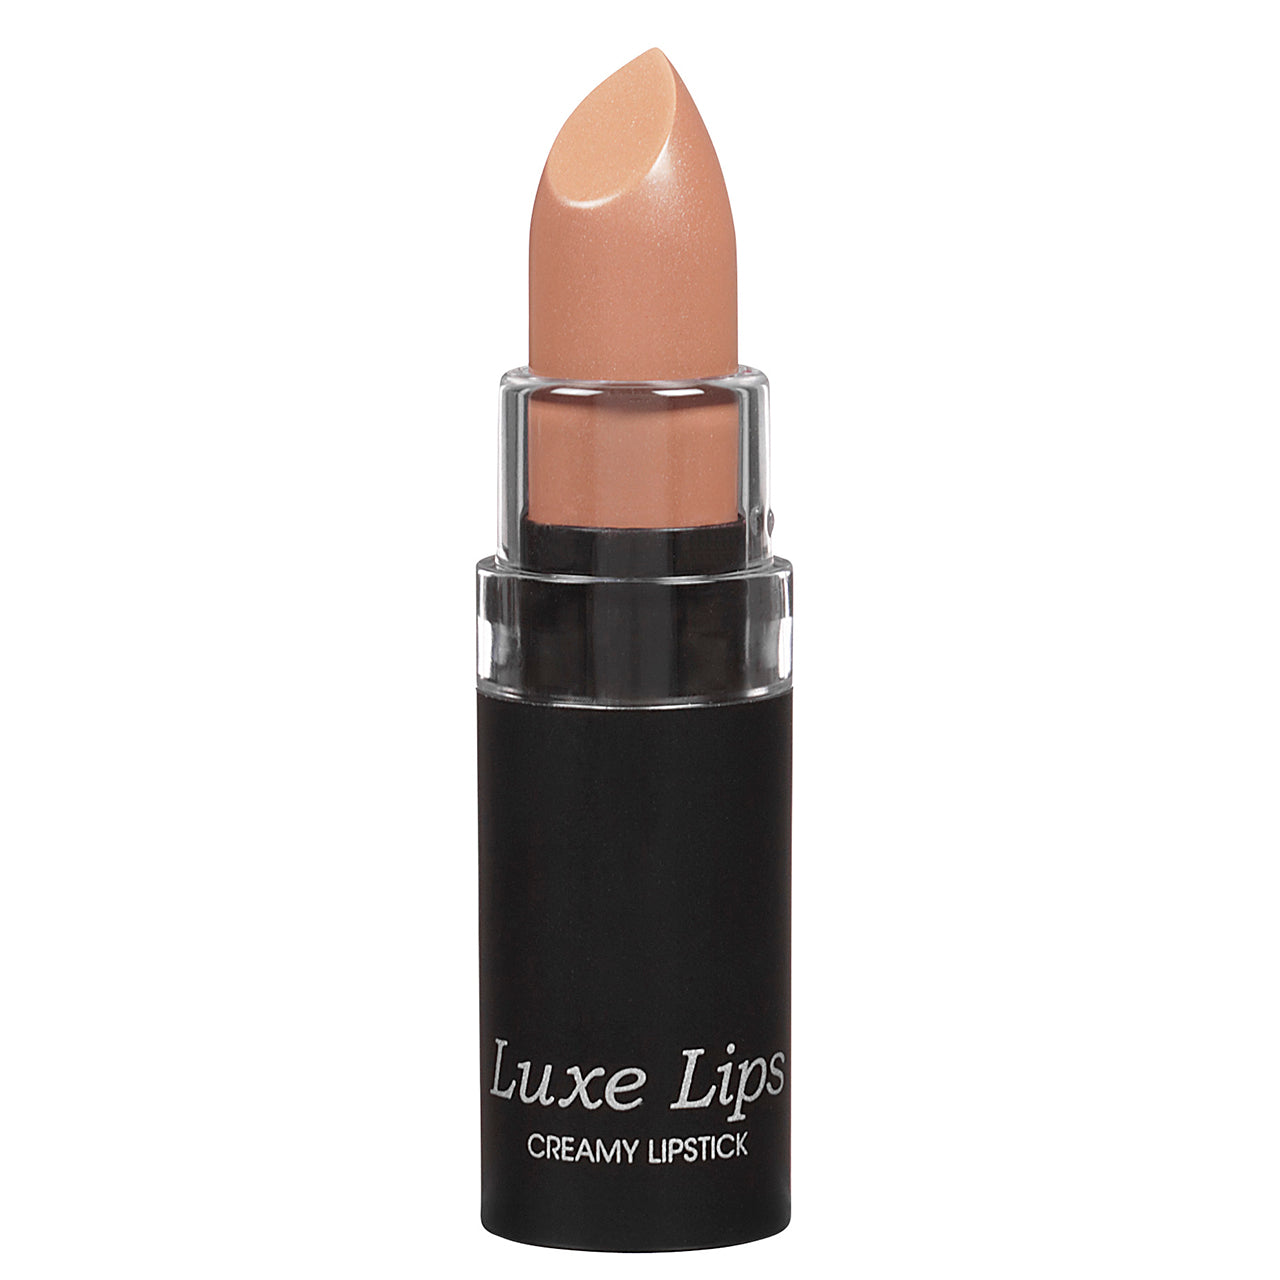 Styli-Style Cosmetics Luxe Lips Creamy Lipstick - Birthday Suit - ADDROS.COM